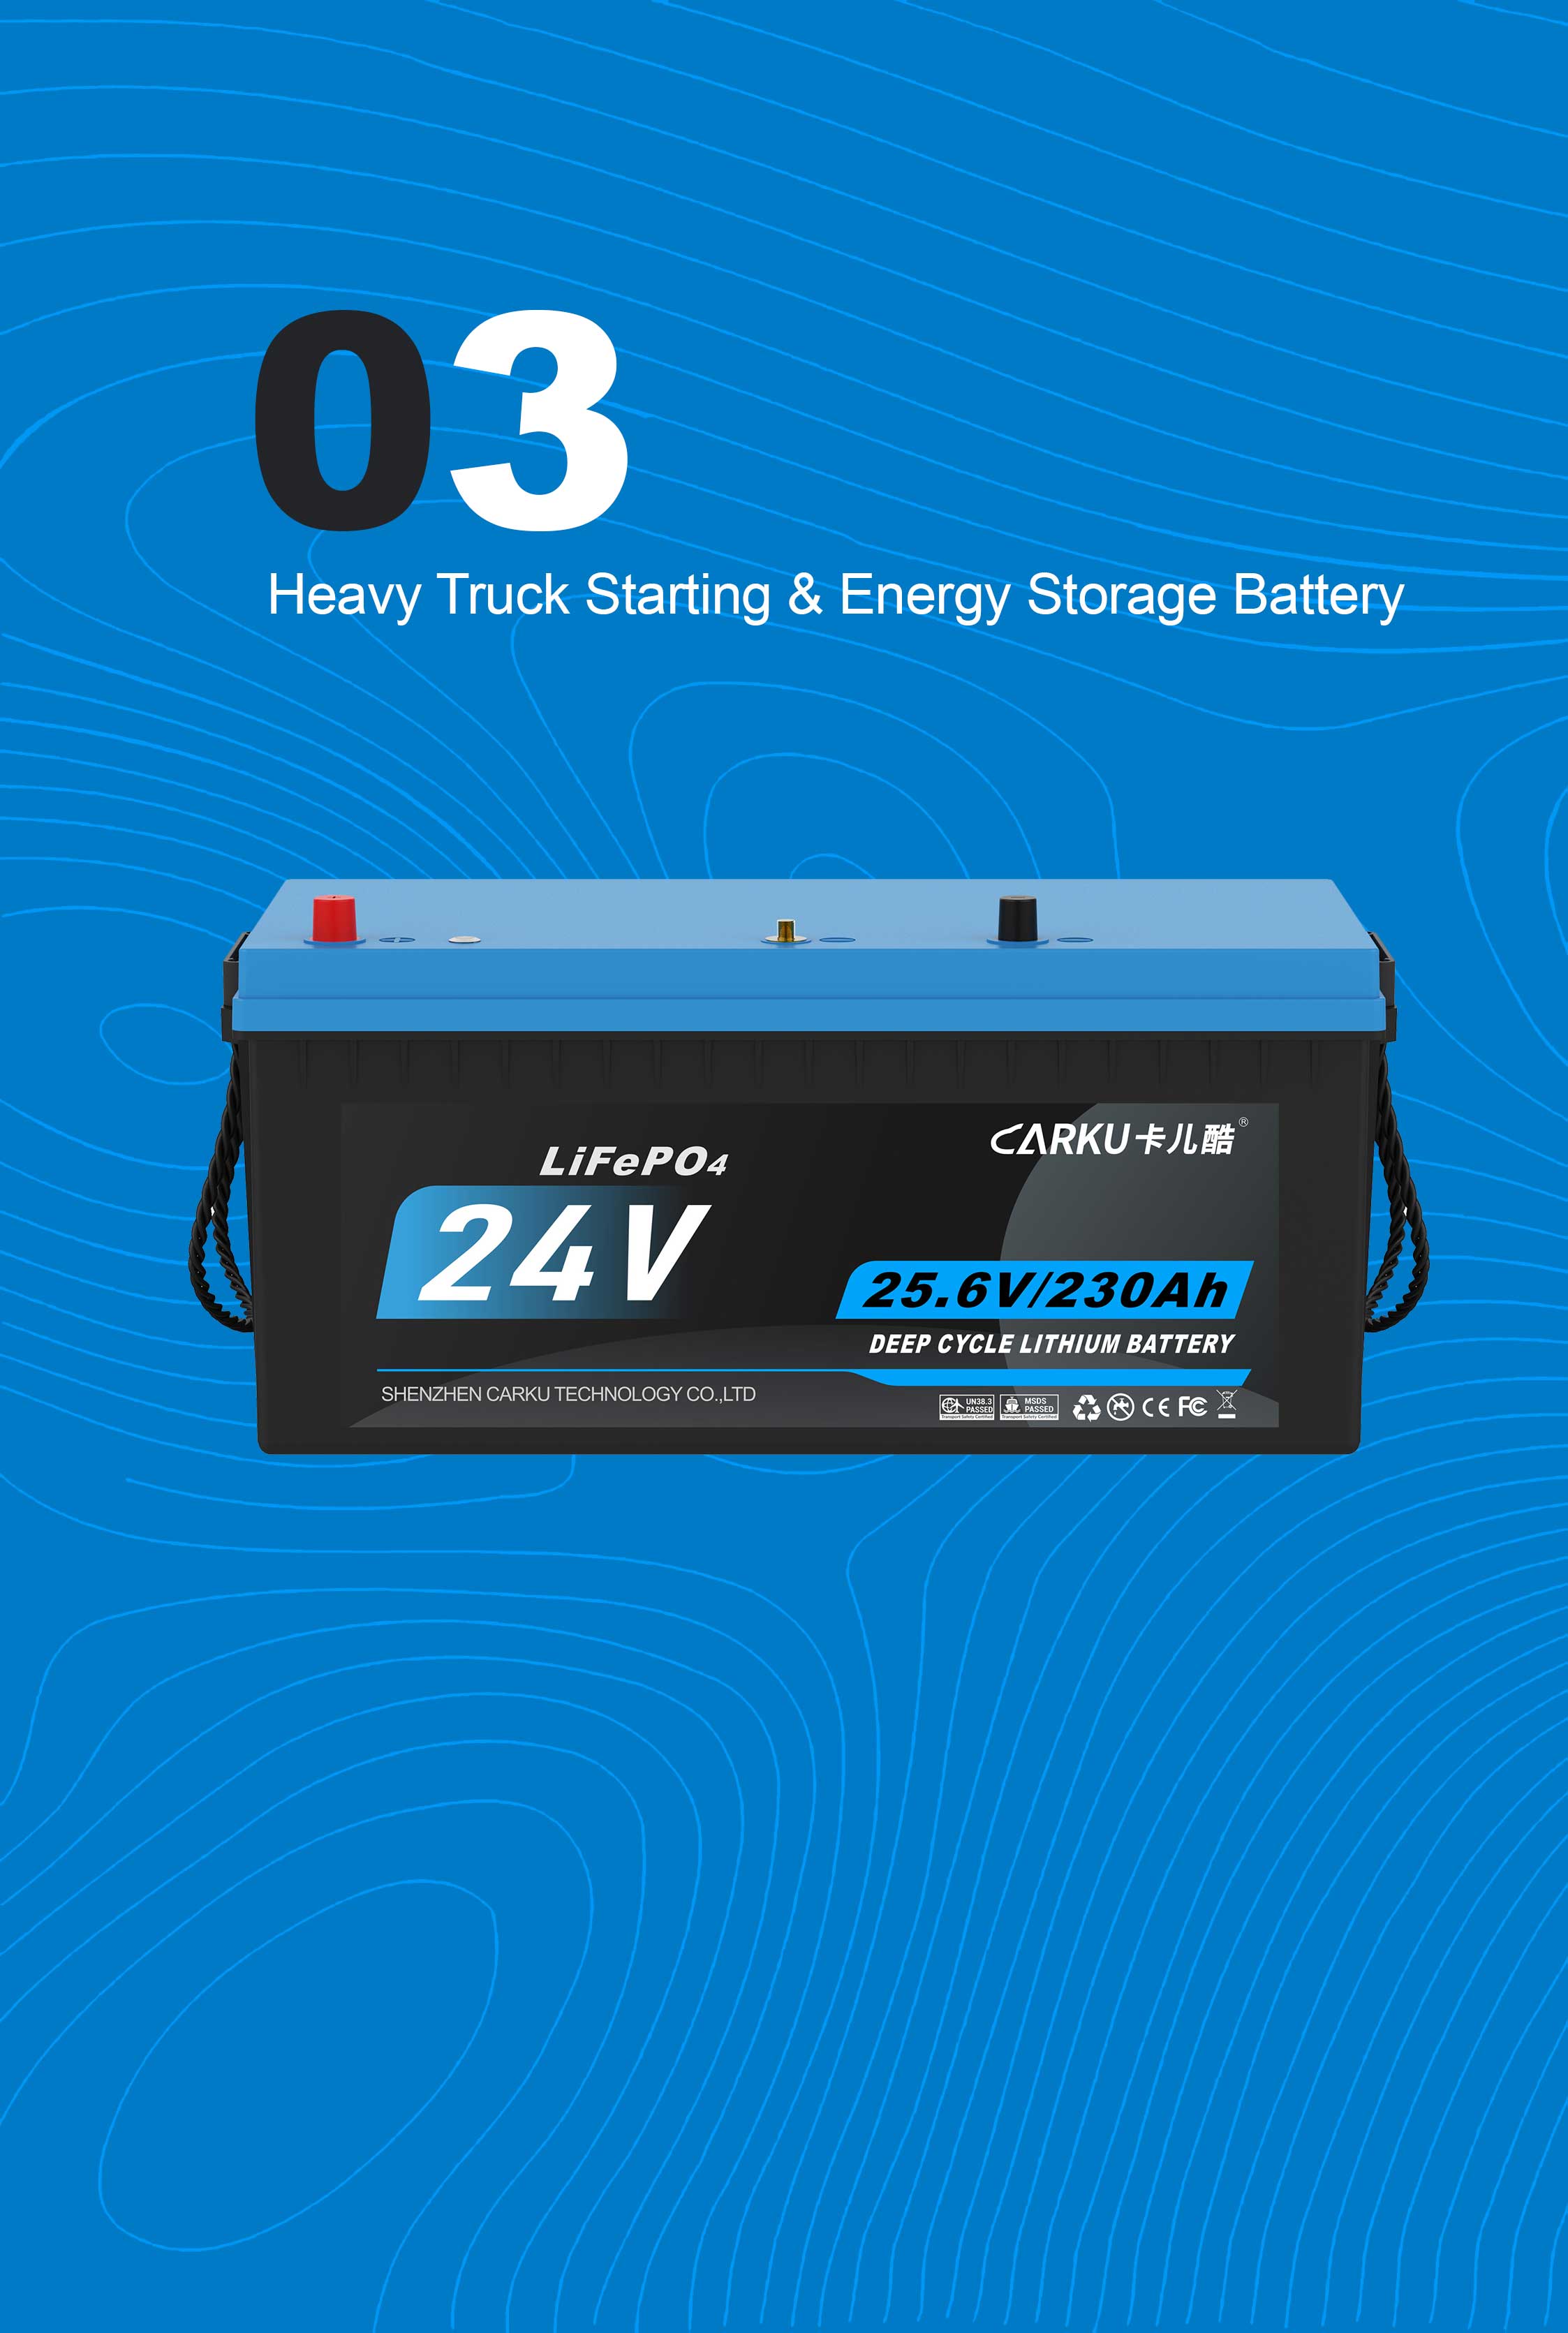 Heavy Truck Starting&Energy Storage Battery